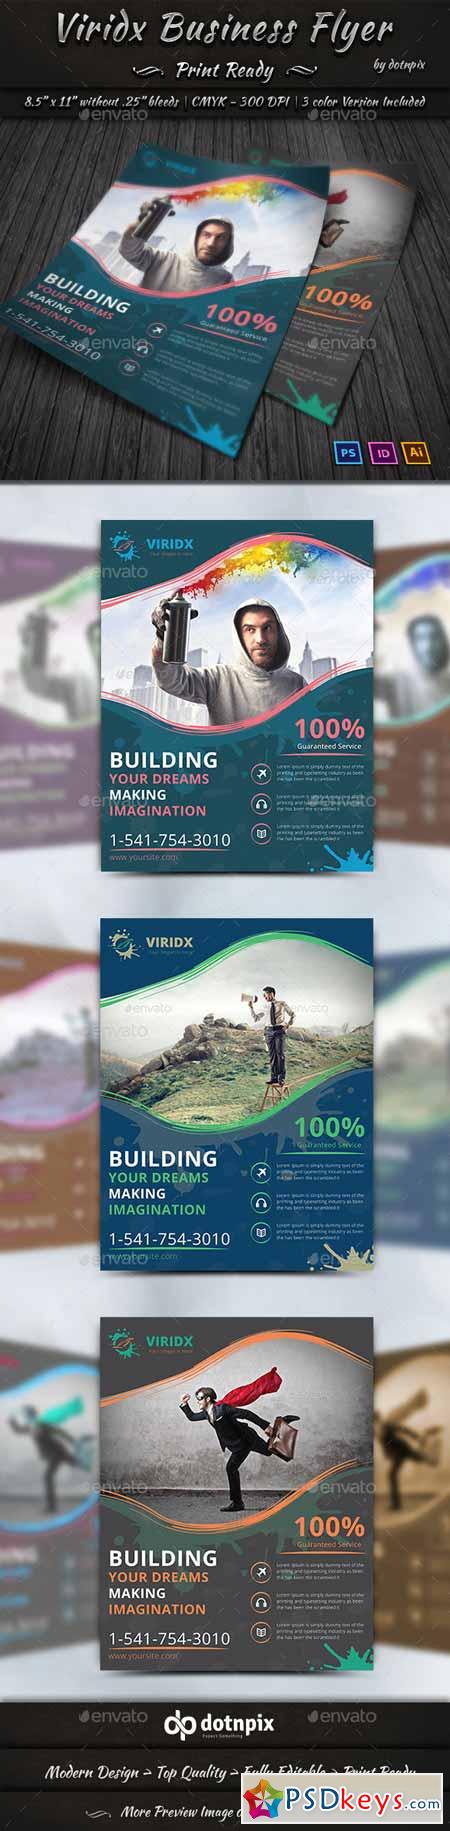 Viridx Business Flyer 10279997